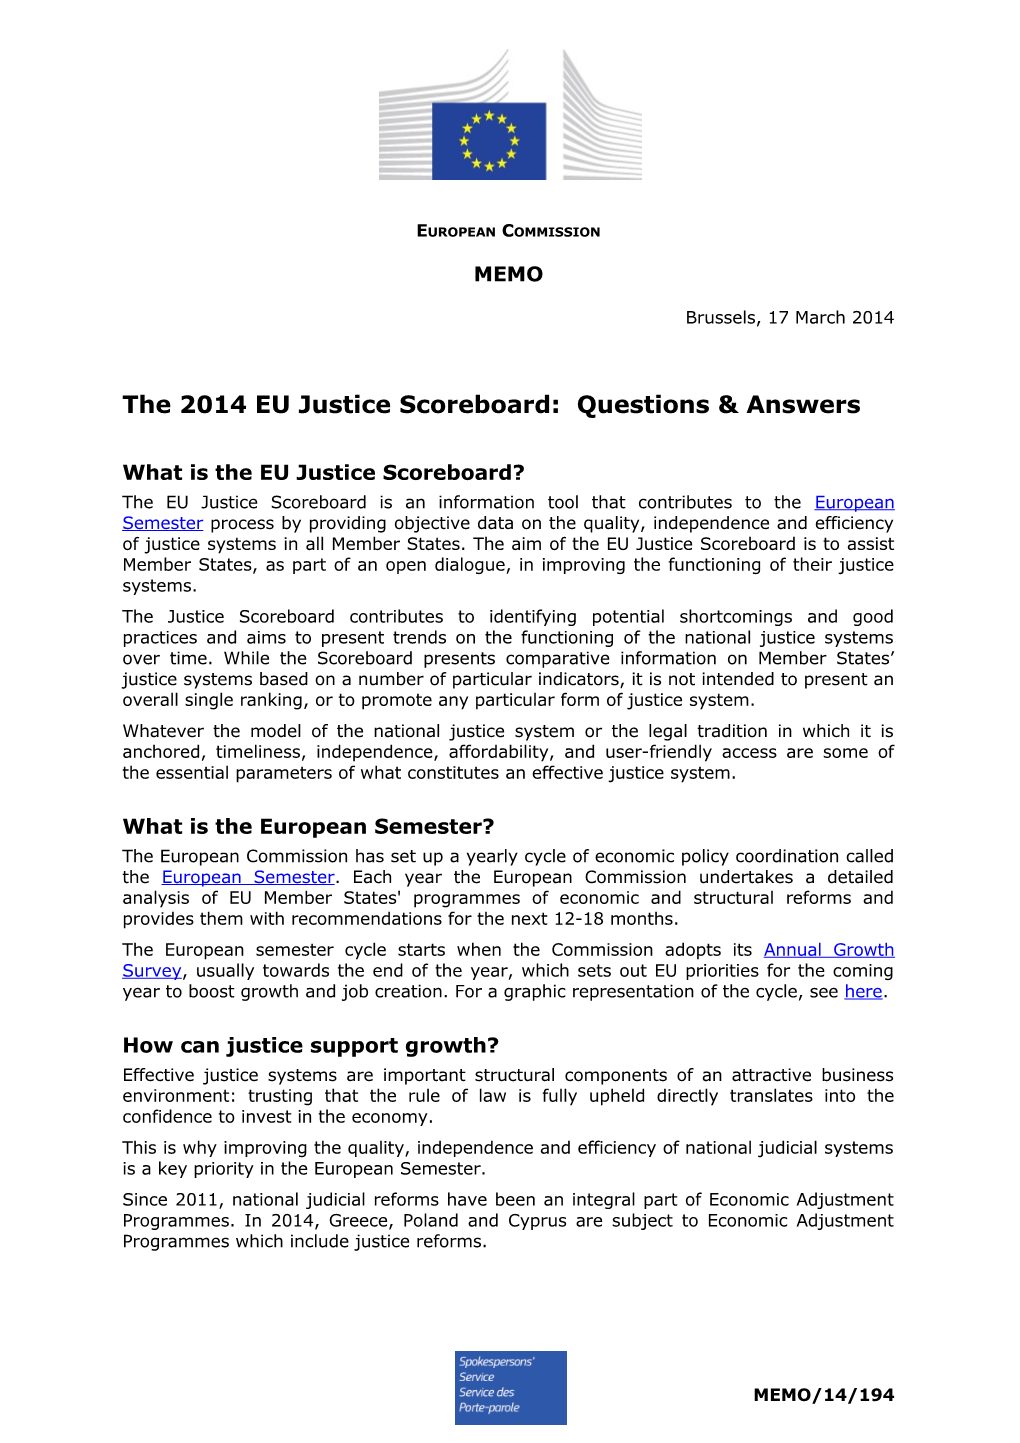 The 2014 EU Justice Scoreboard: Questions & Answers